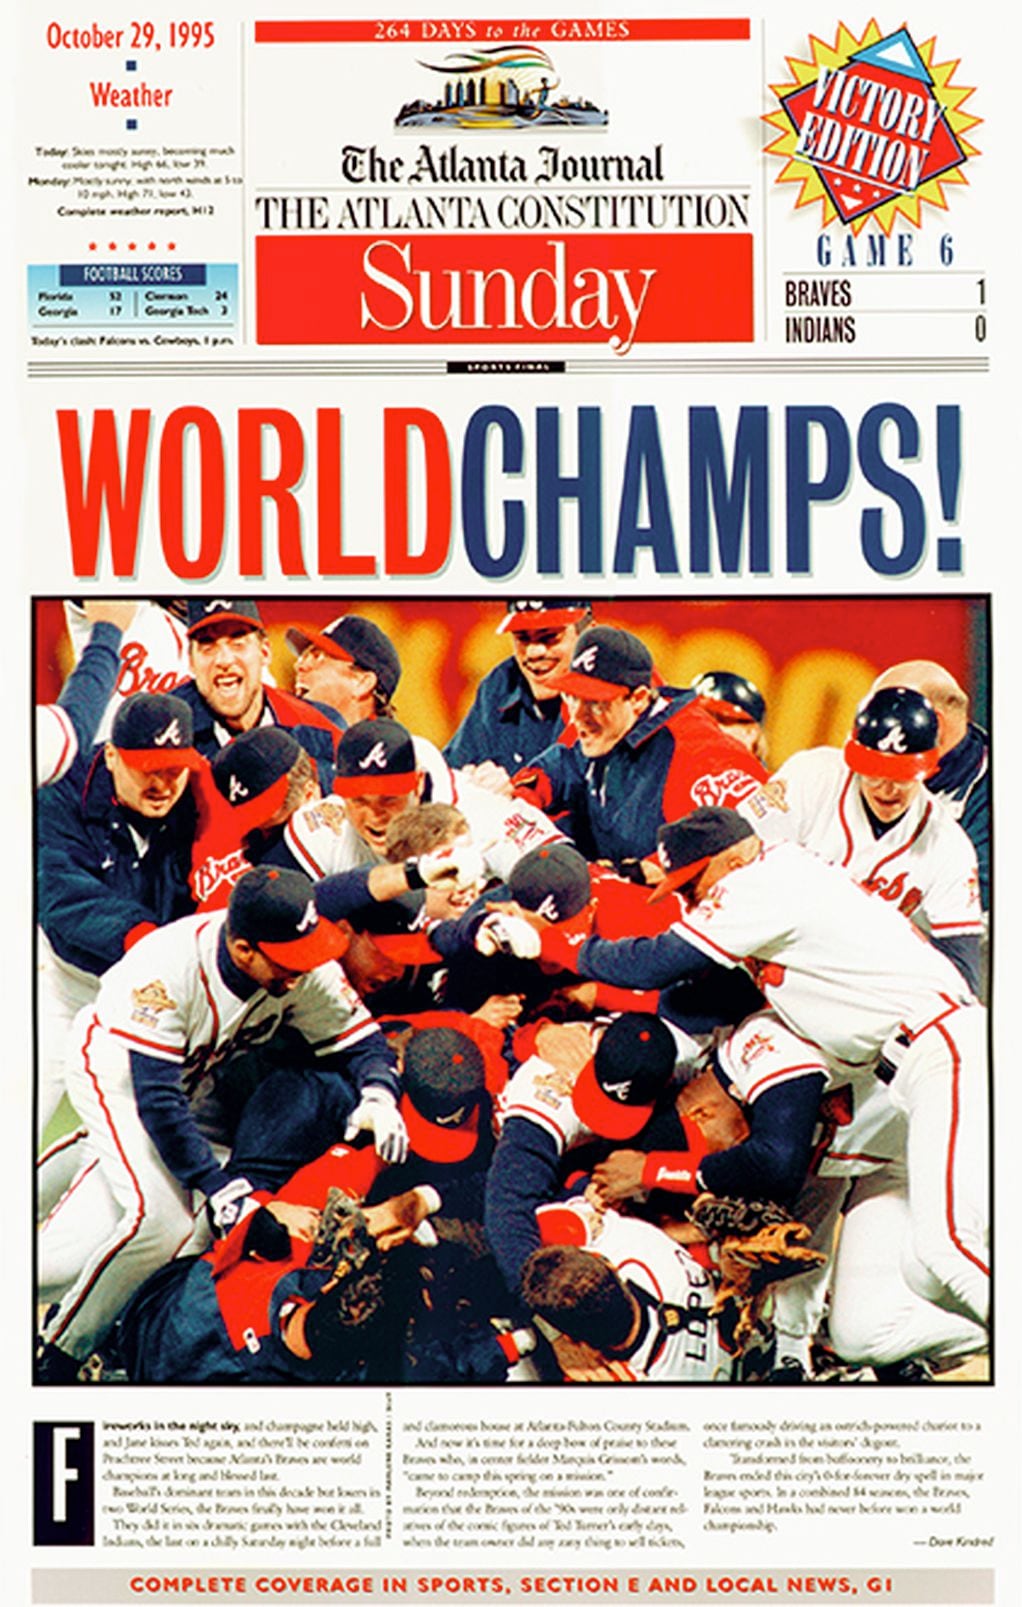 The Atlanta Braves STELLAR PERFORMANCE in the 1995 World Series